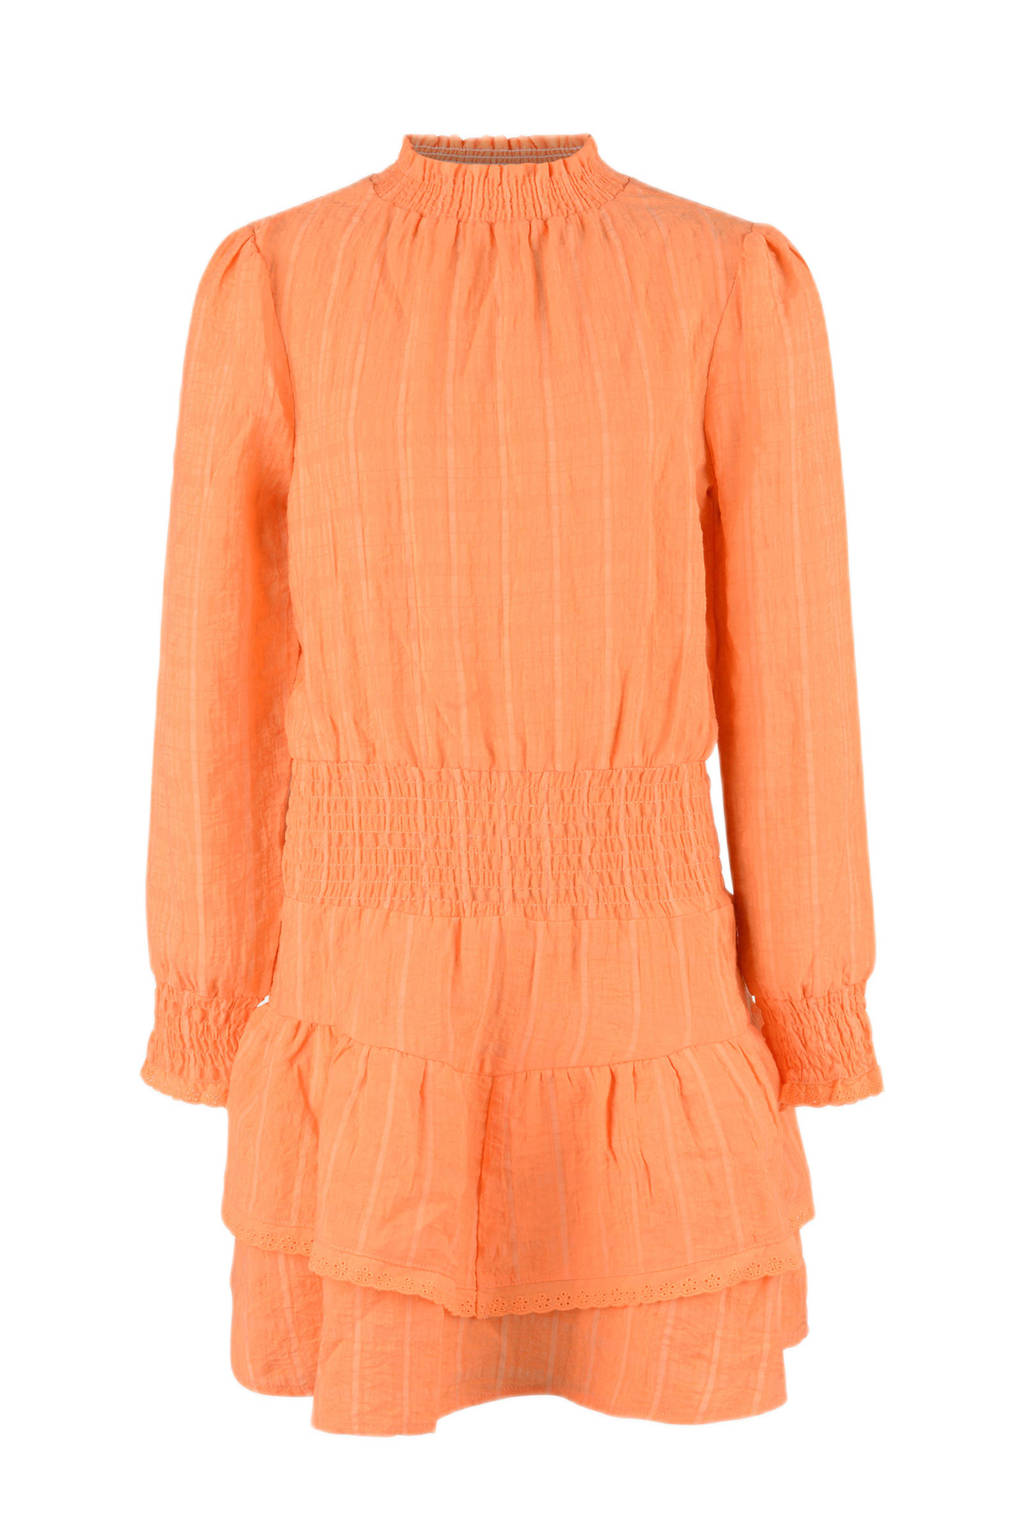 Shoeby Jill & Mitch gestreepte jurk Crinkle Check oranje, Oranje